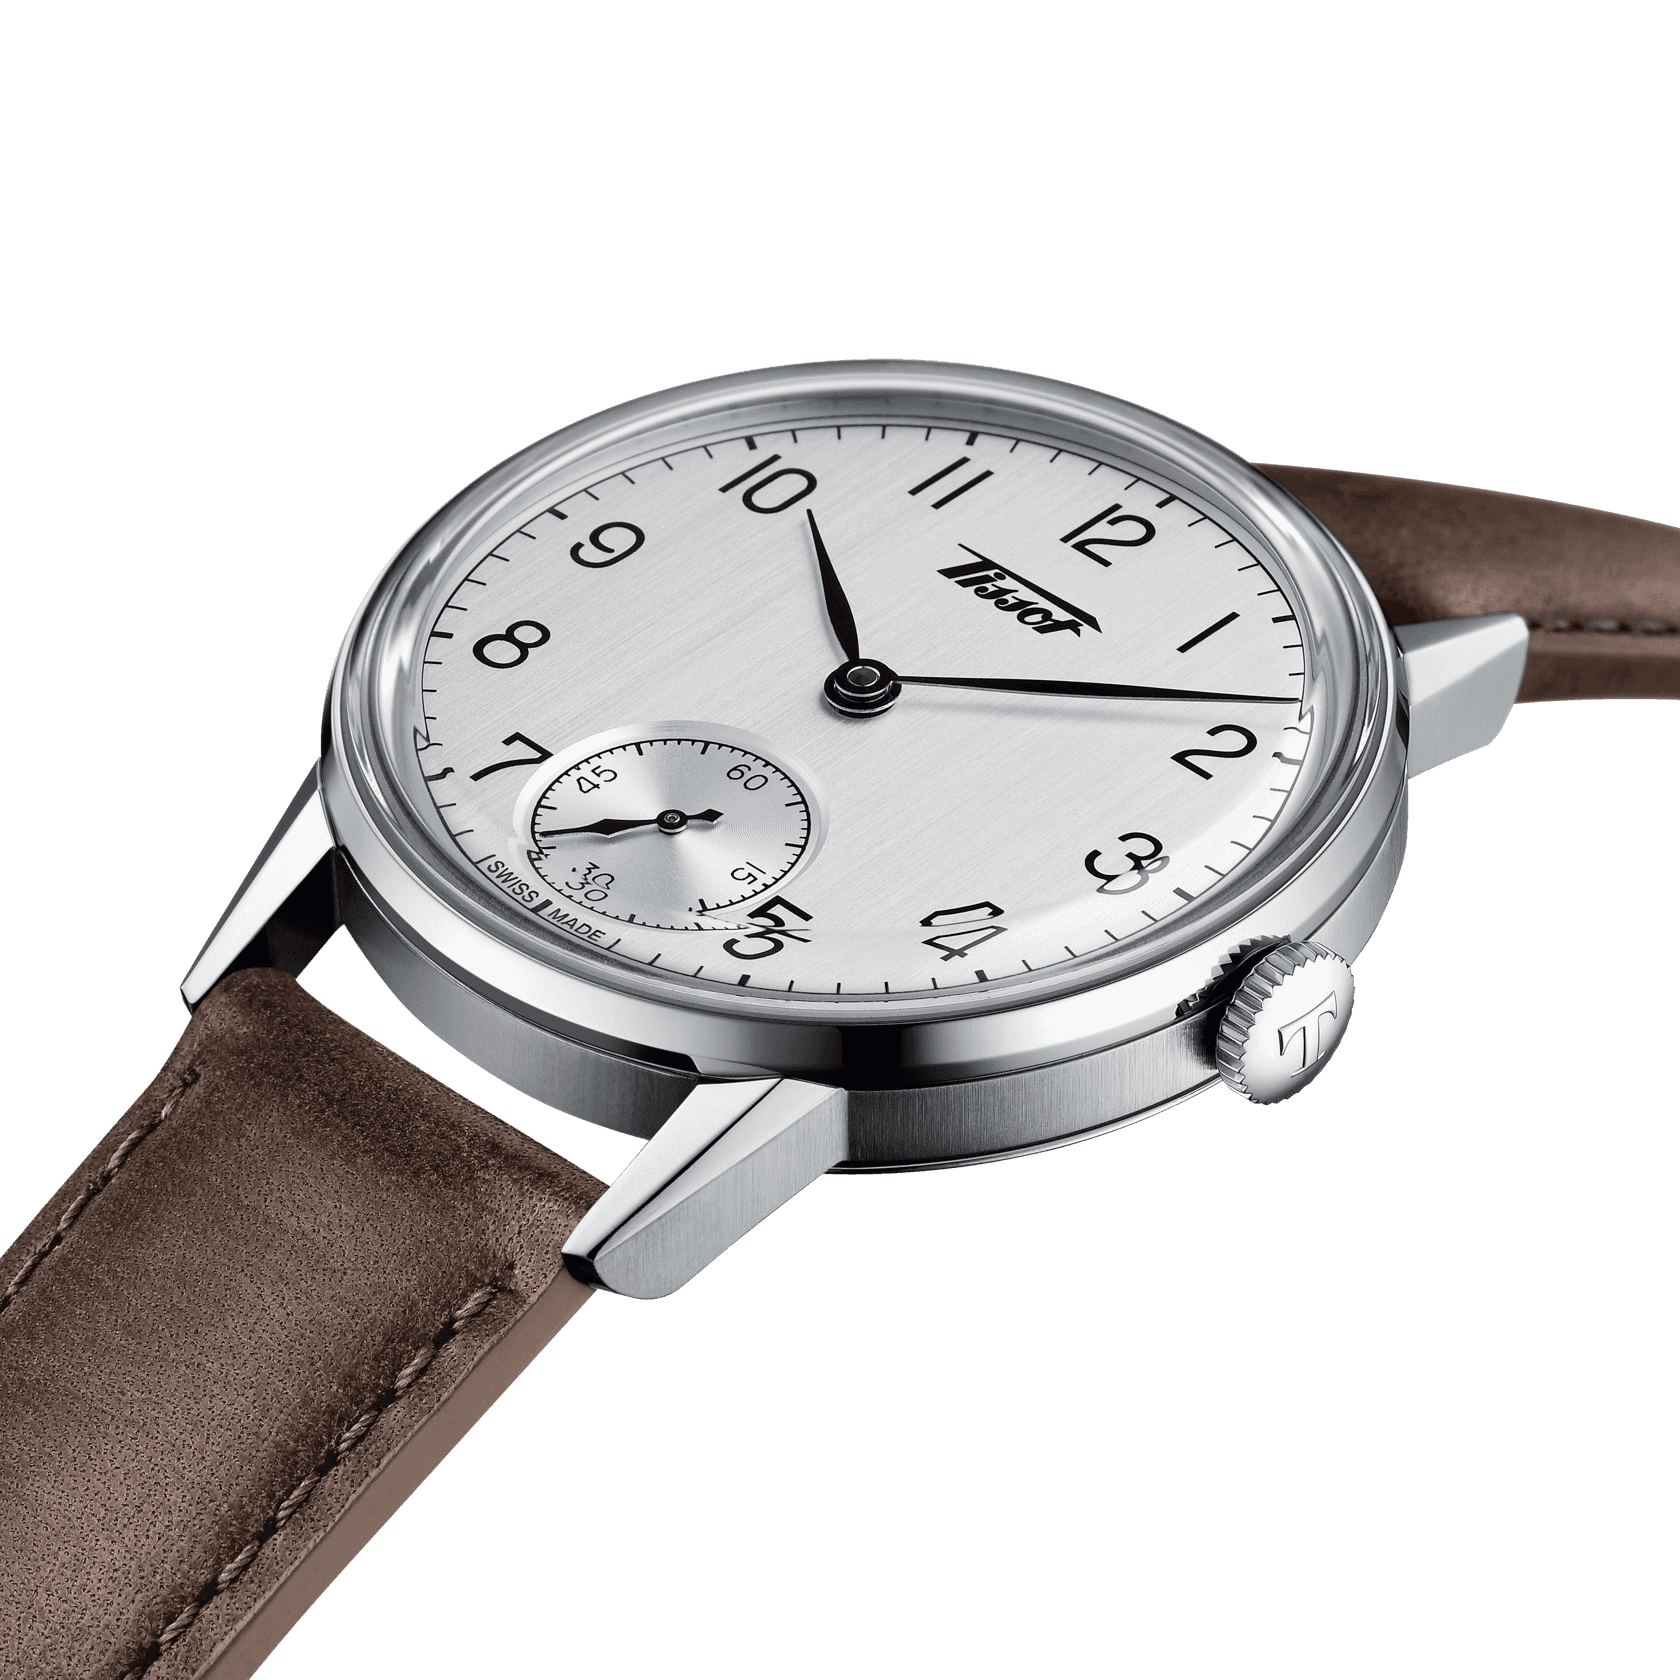 Replica Watch Repair Information